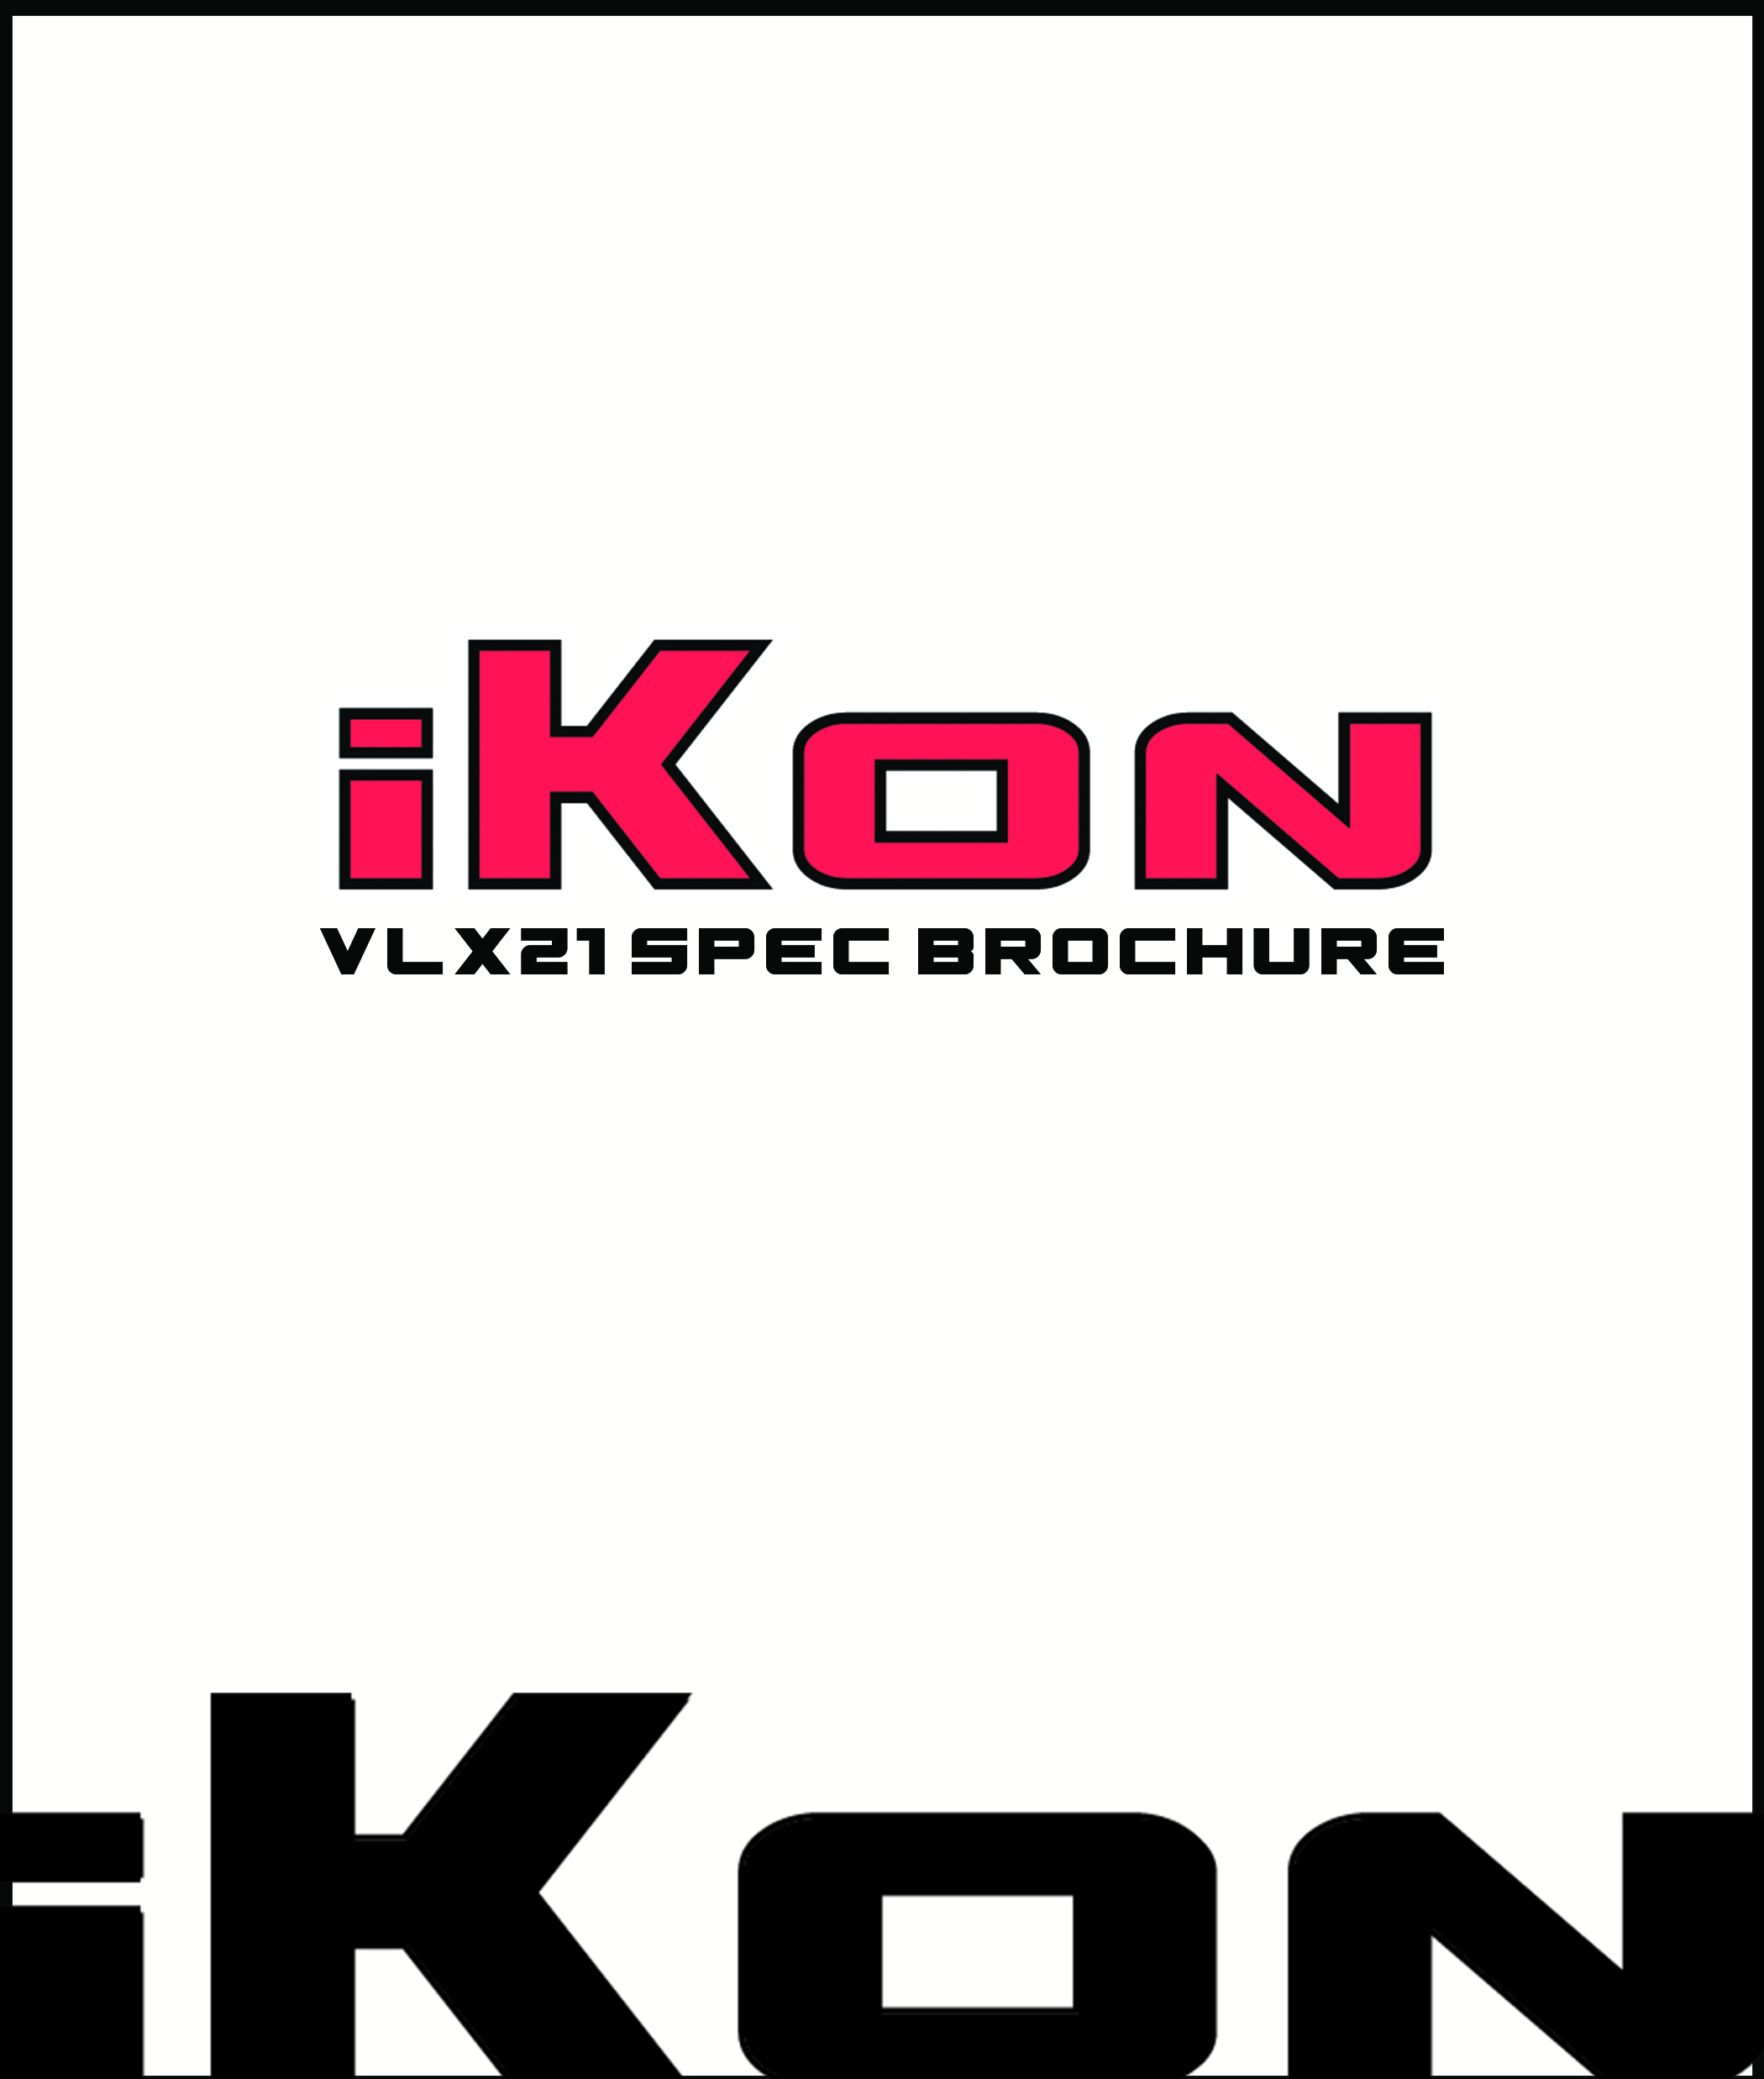 iKon VLX21 Spec brochure